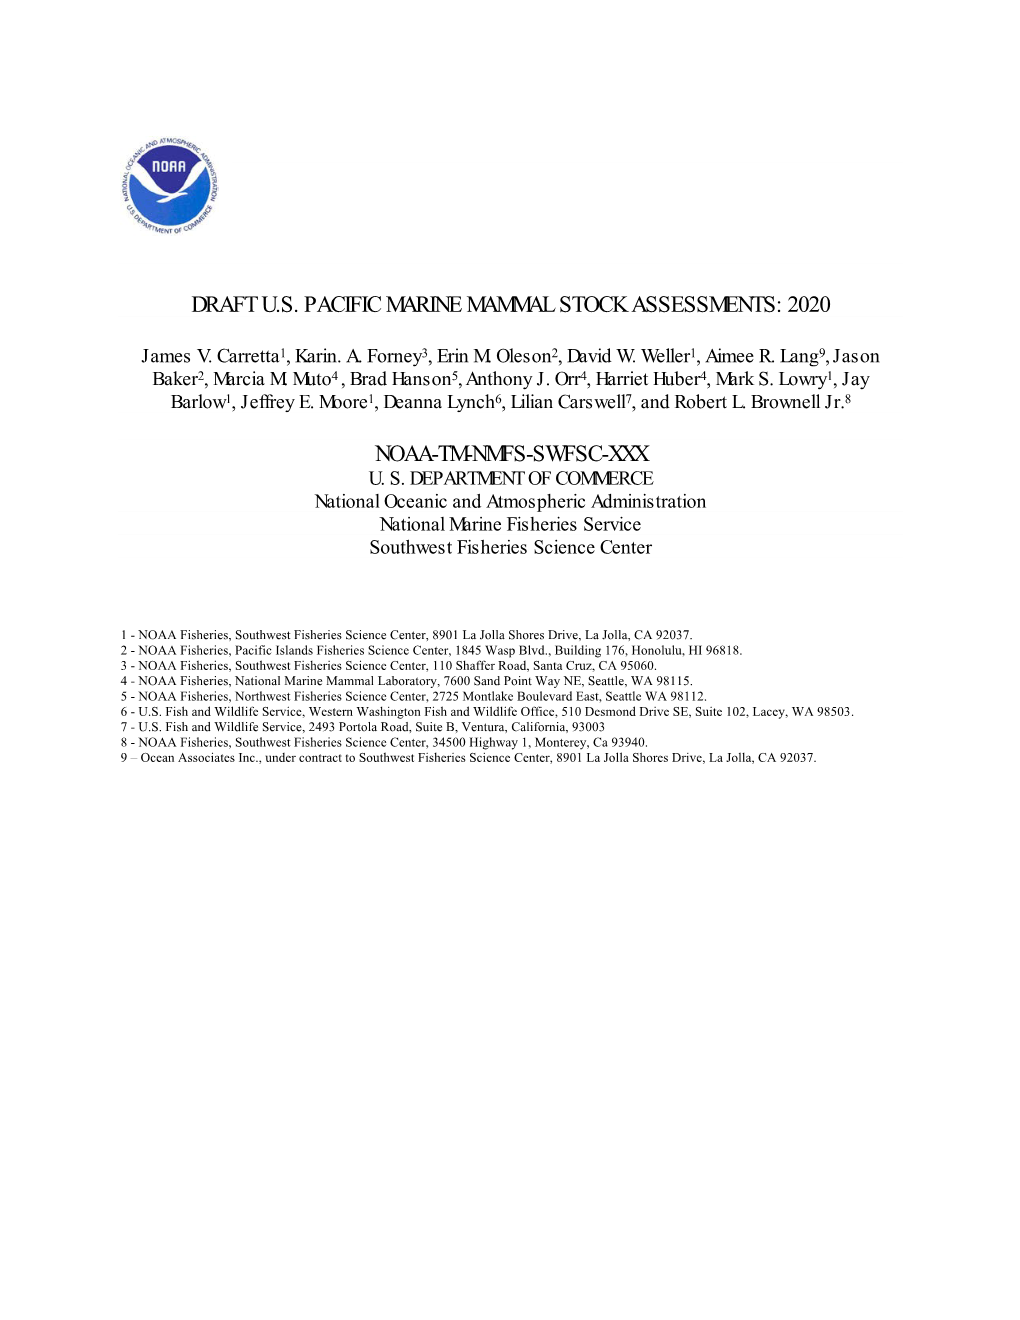 Draft U.S. Pacific Marine Mammal Stock Assessments: 2020